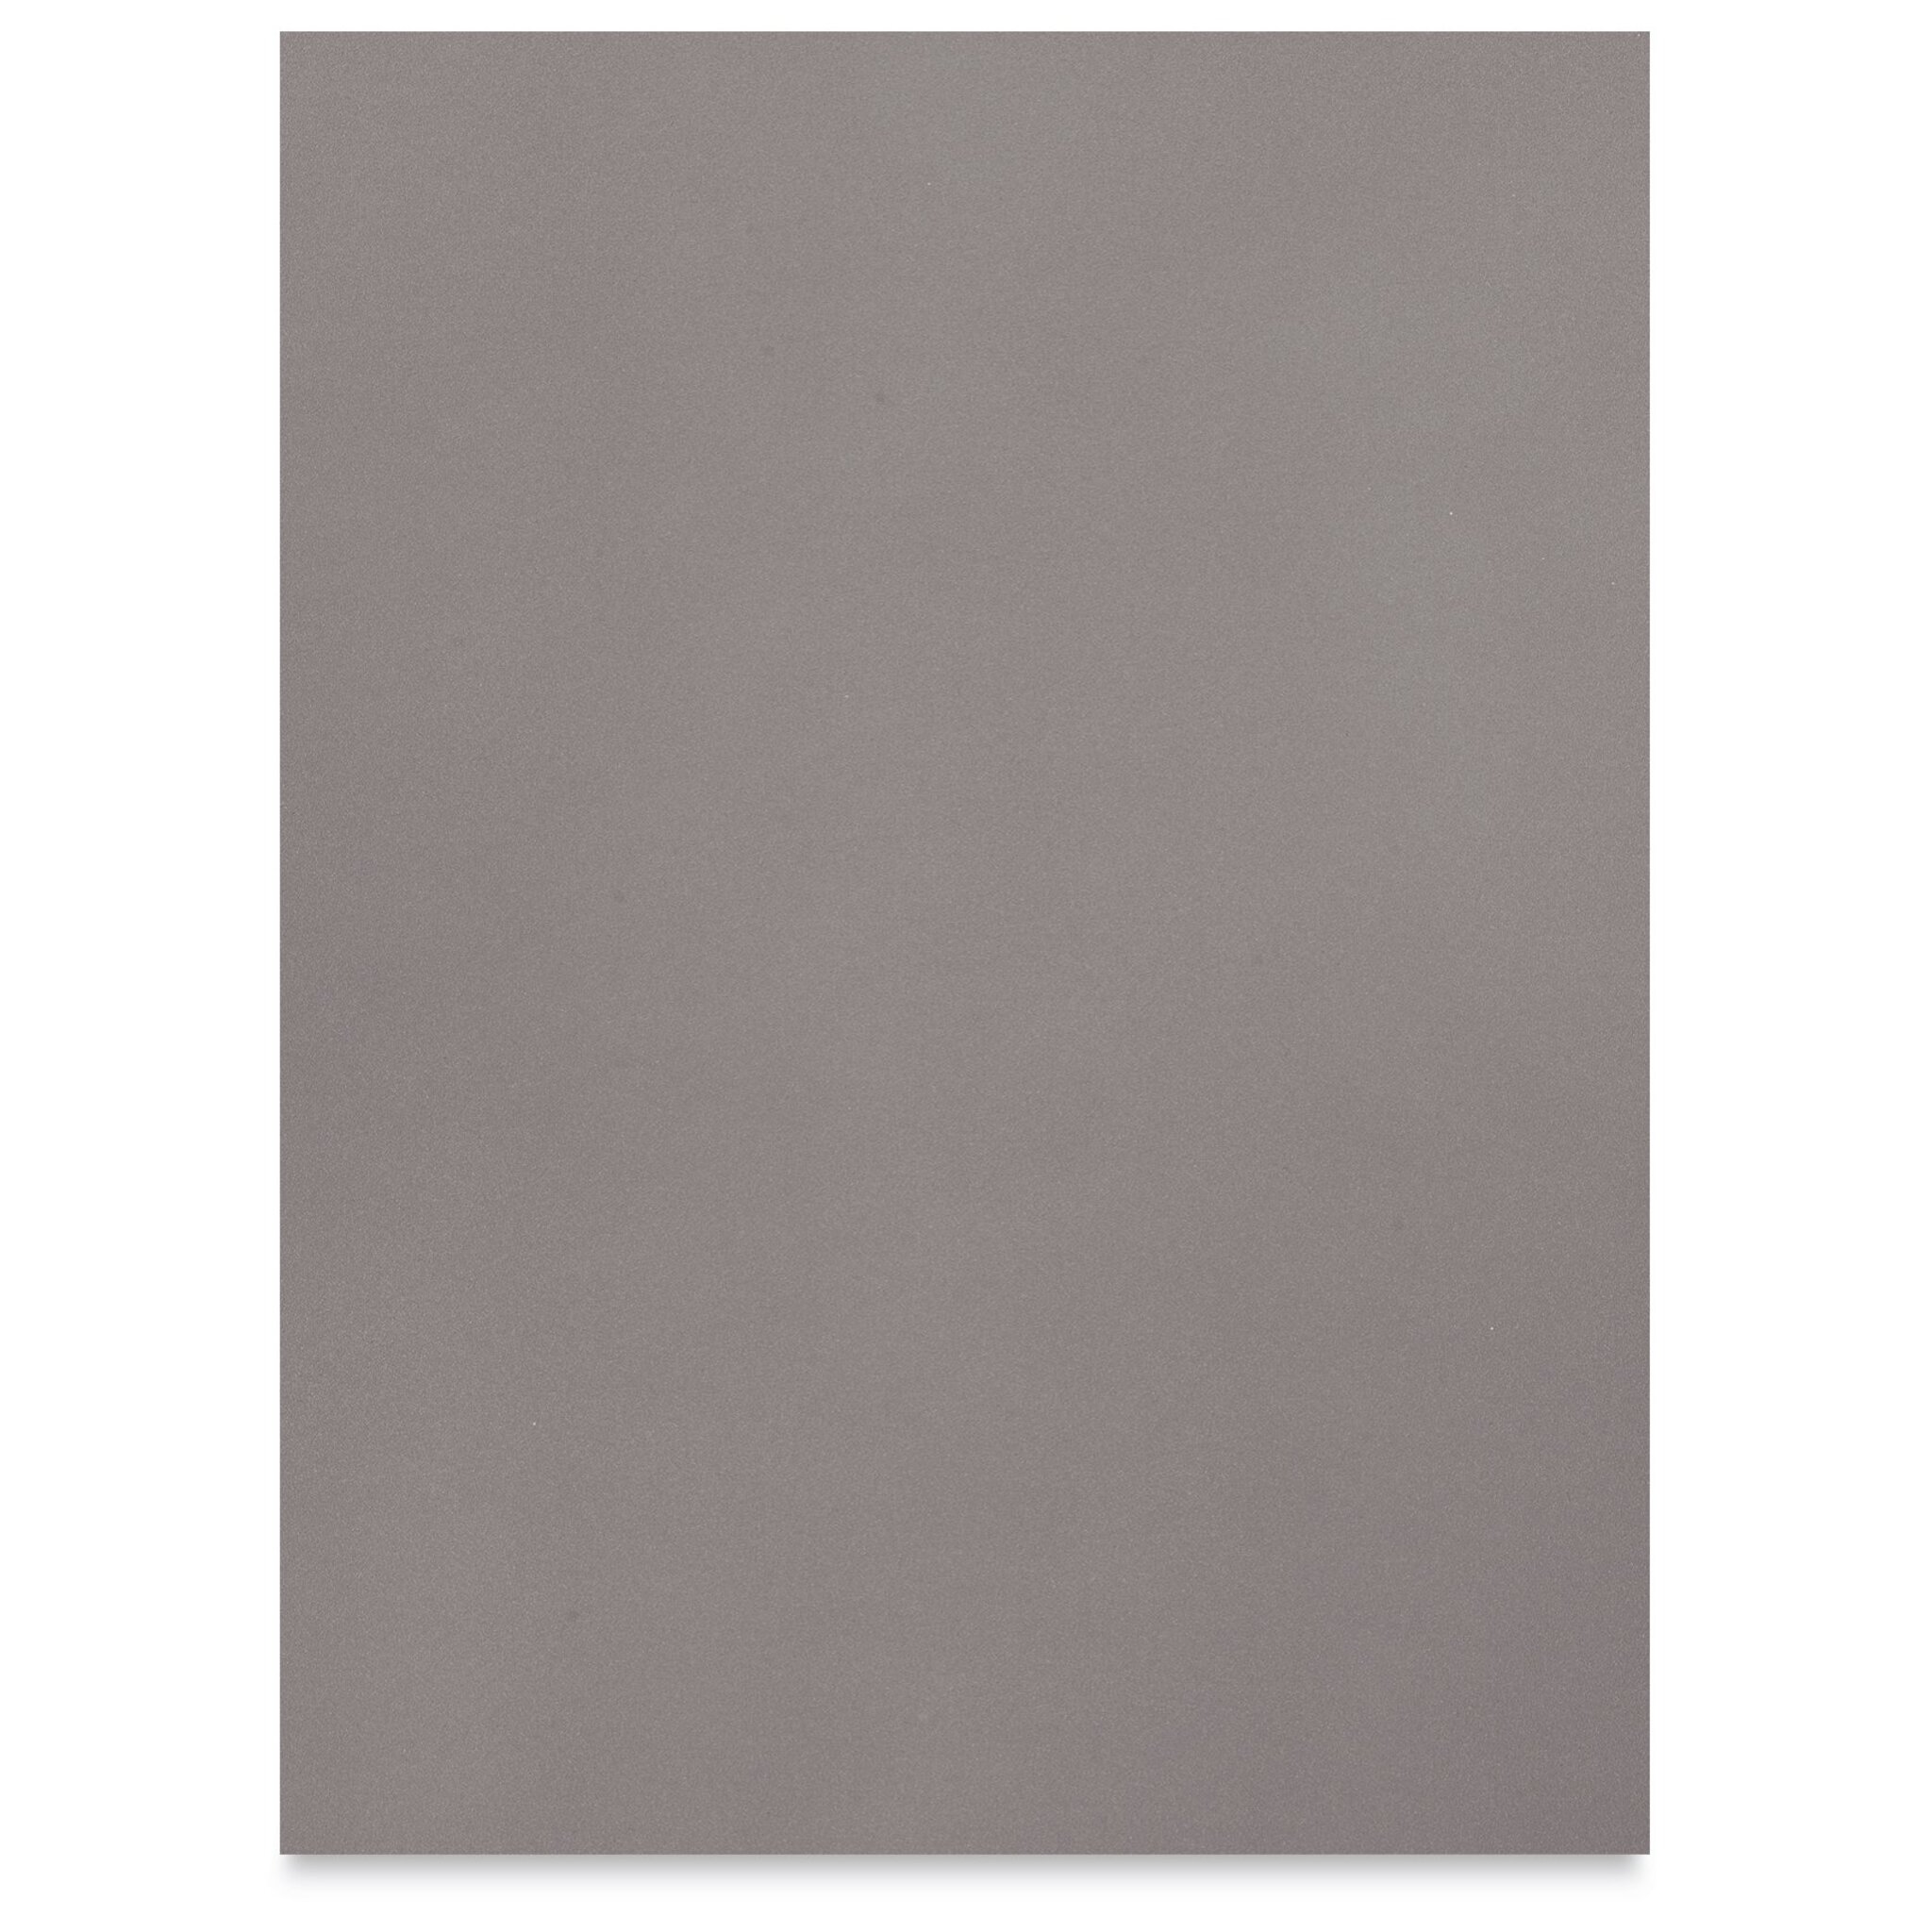 Clairefontaine Pastelmat Pad - Palette No. 4, 7 x 9-1/2